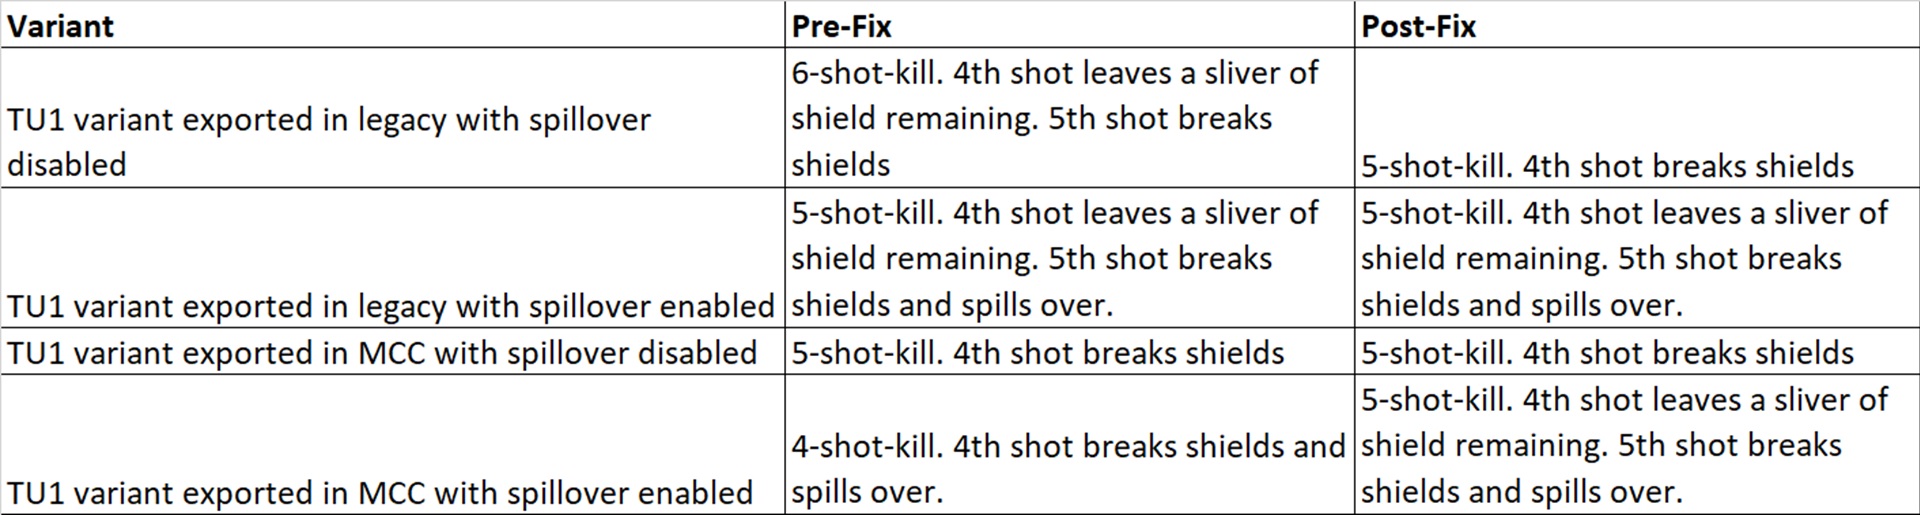 Table of pistol damage variants